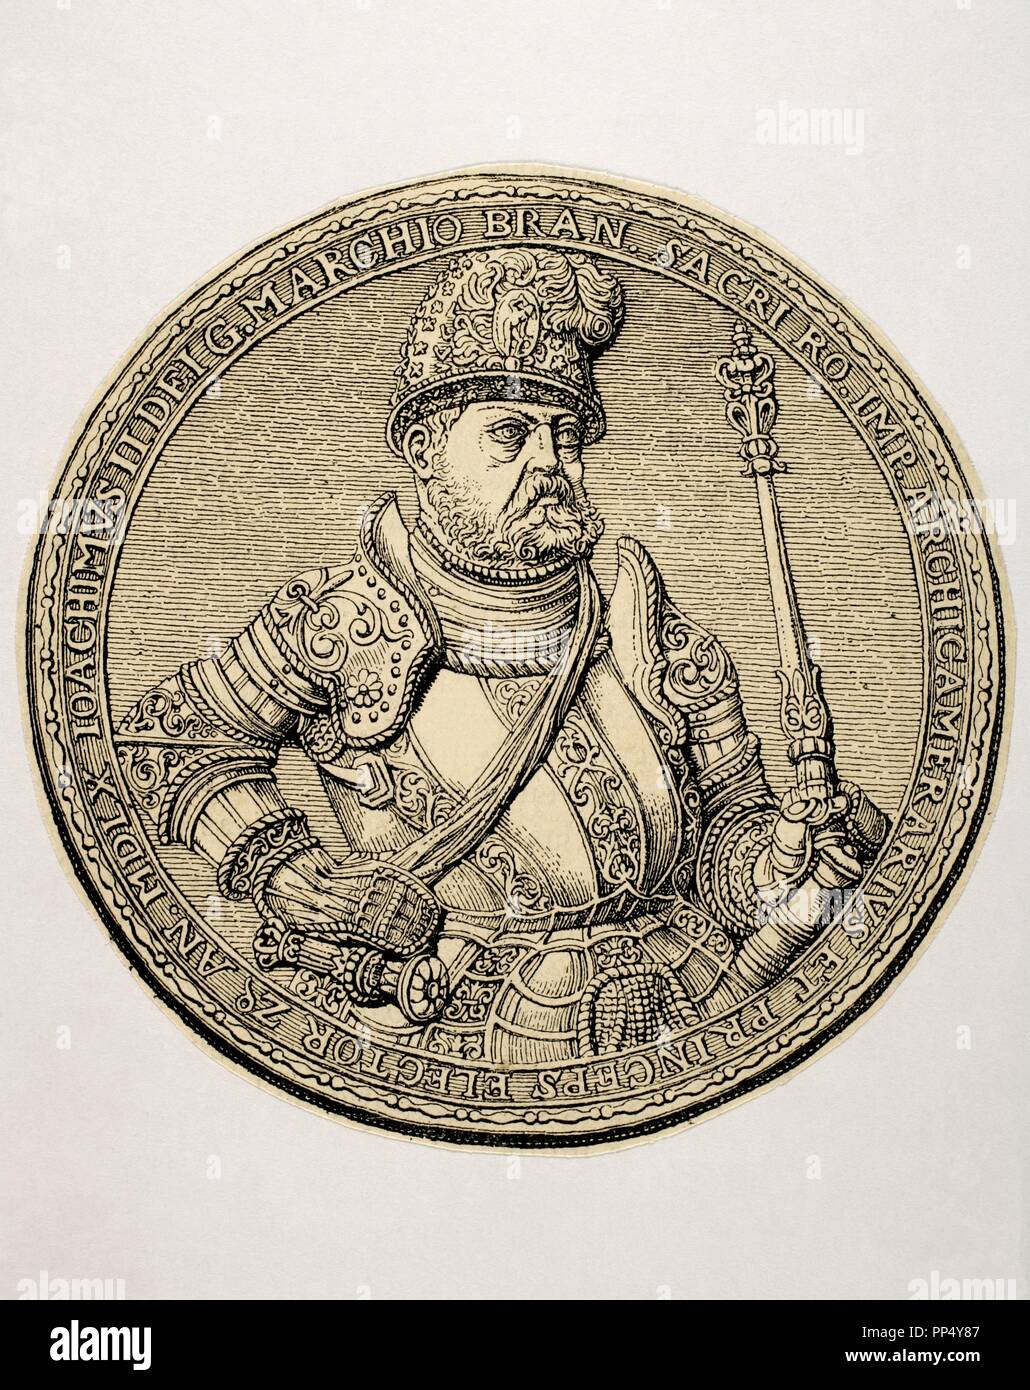 Joachim II Hector (1505-1571). Elector of Brandenburg. Member of the House of Hohenzollern. Engraving. 'Historia Universal', 1882. Stock Photo